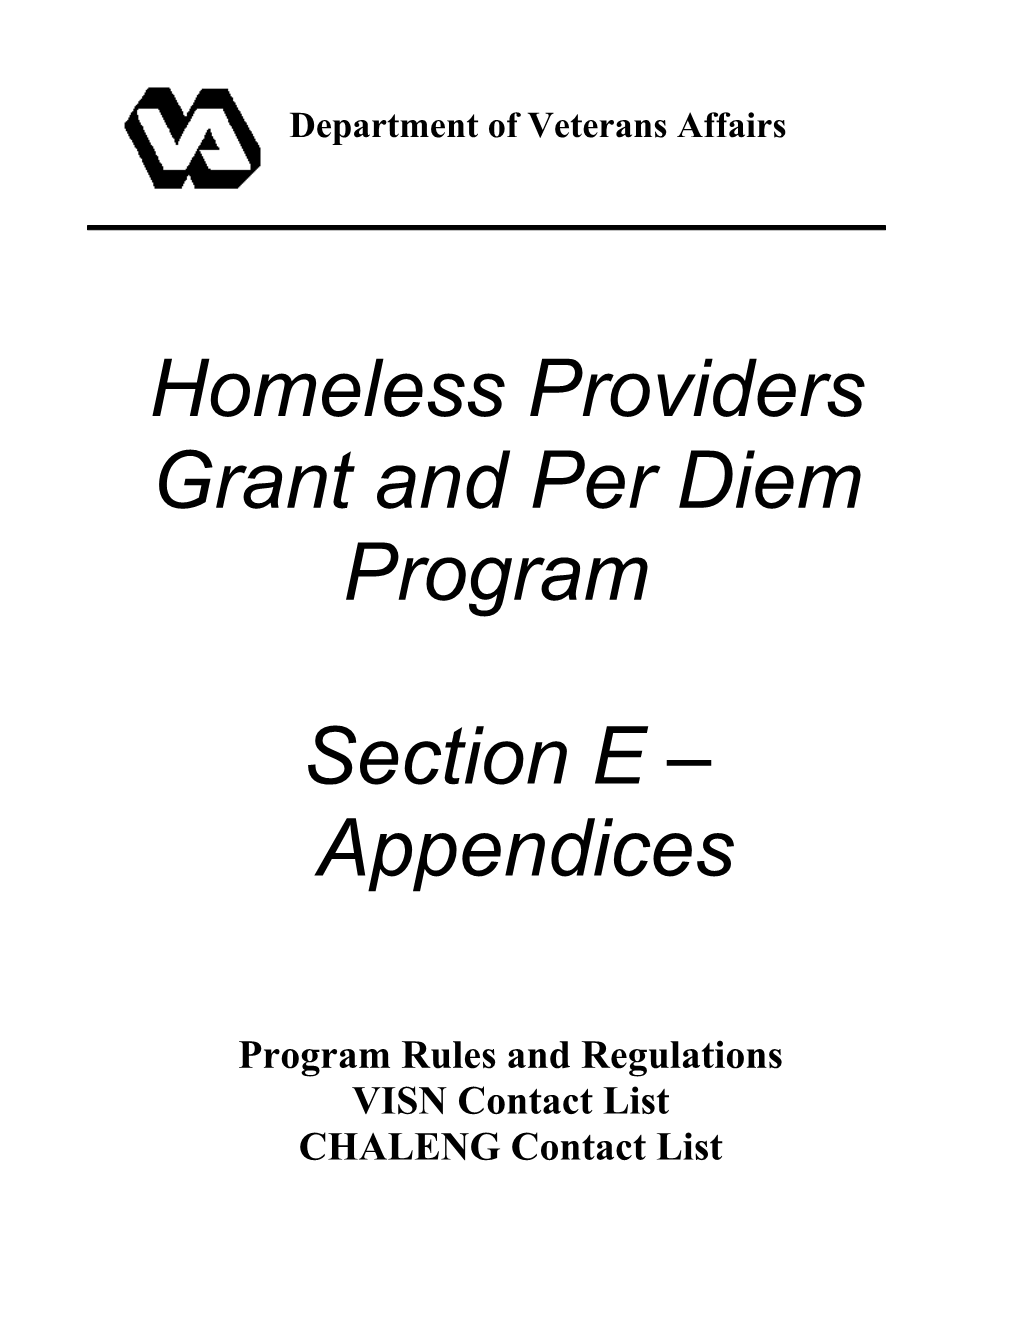 Homeless Provider Grant and Per Diem Program Application